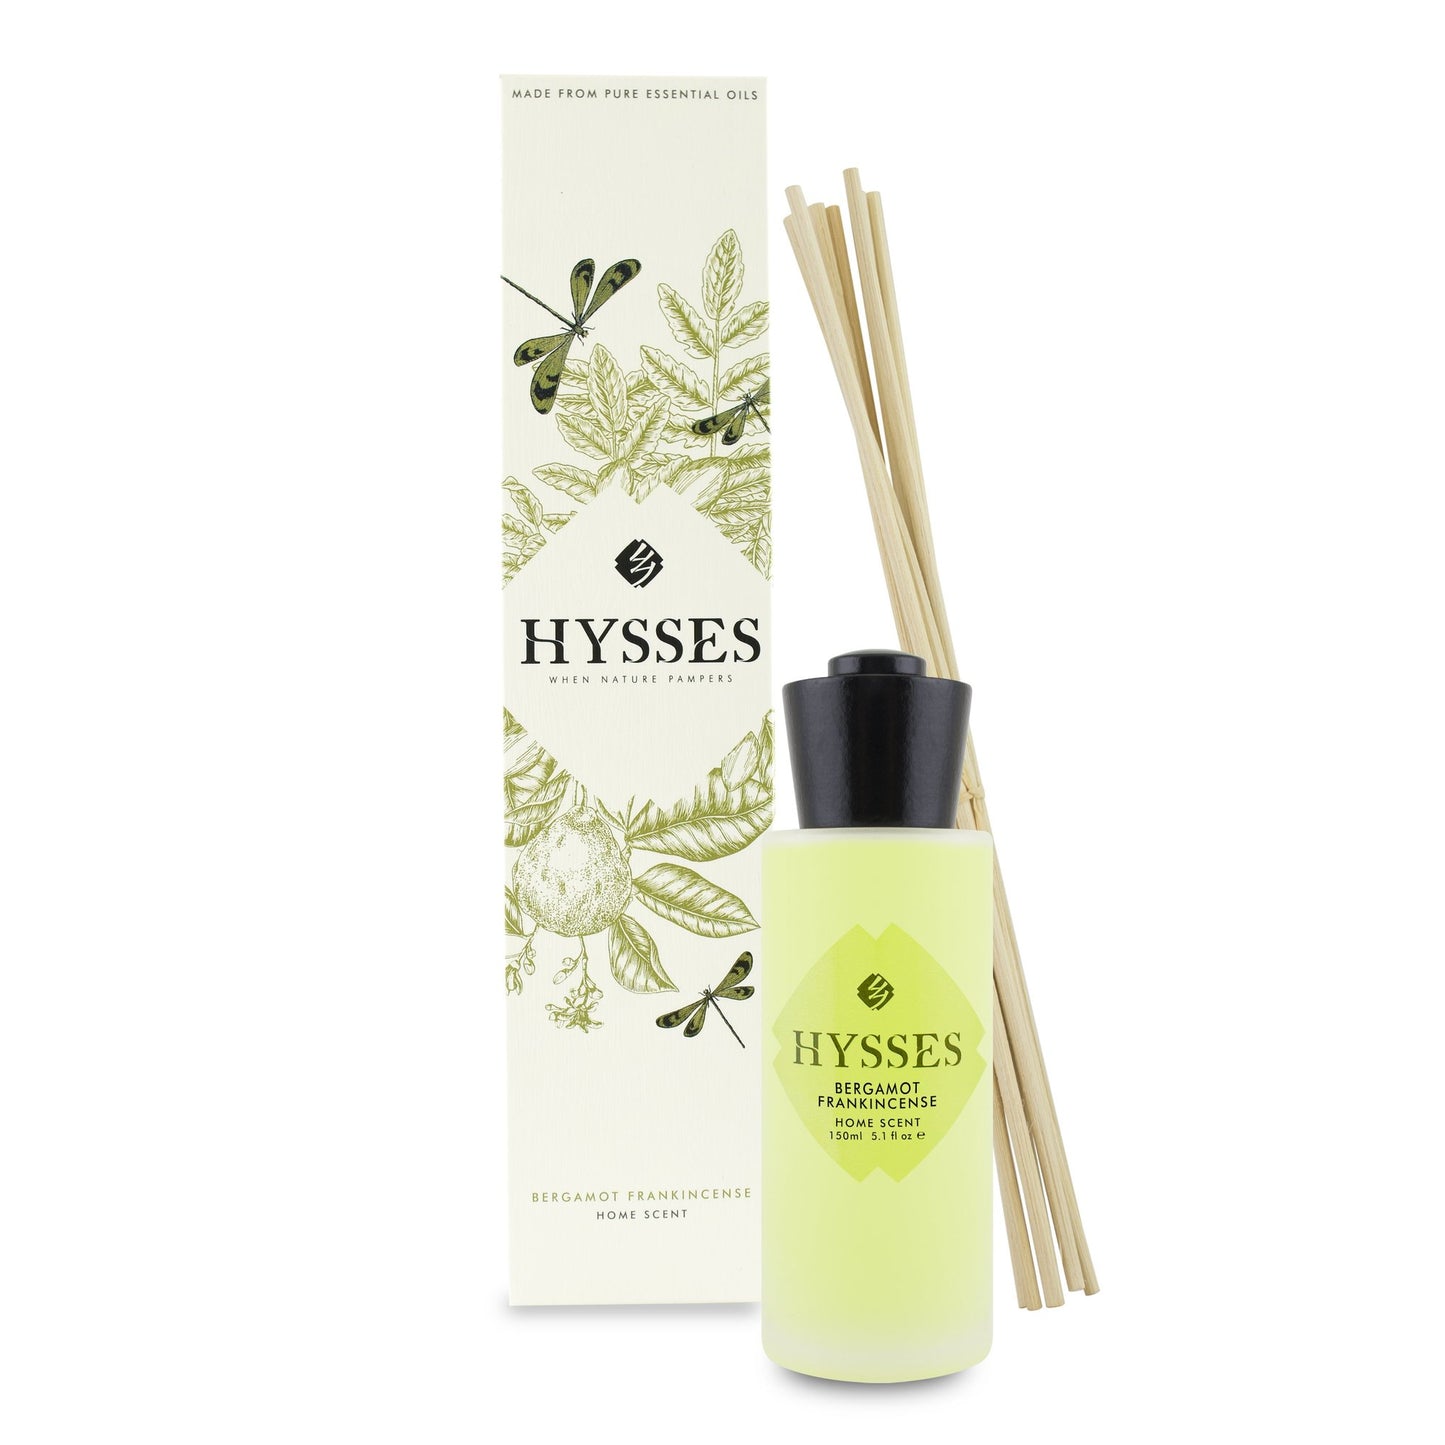 Hysses Home Scent Reed Diffuser 150ml - Bergamot Frankincense